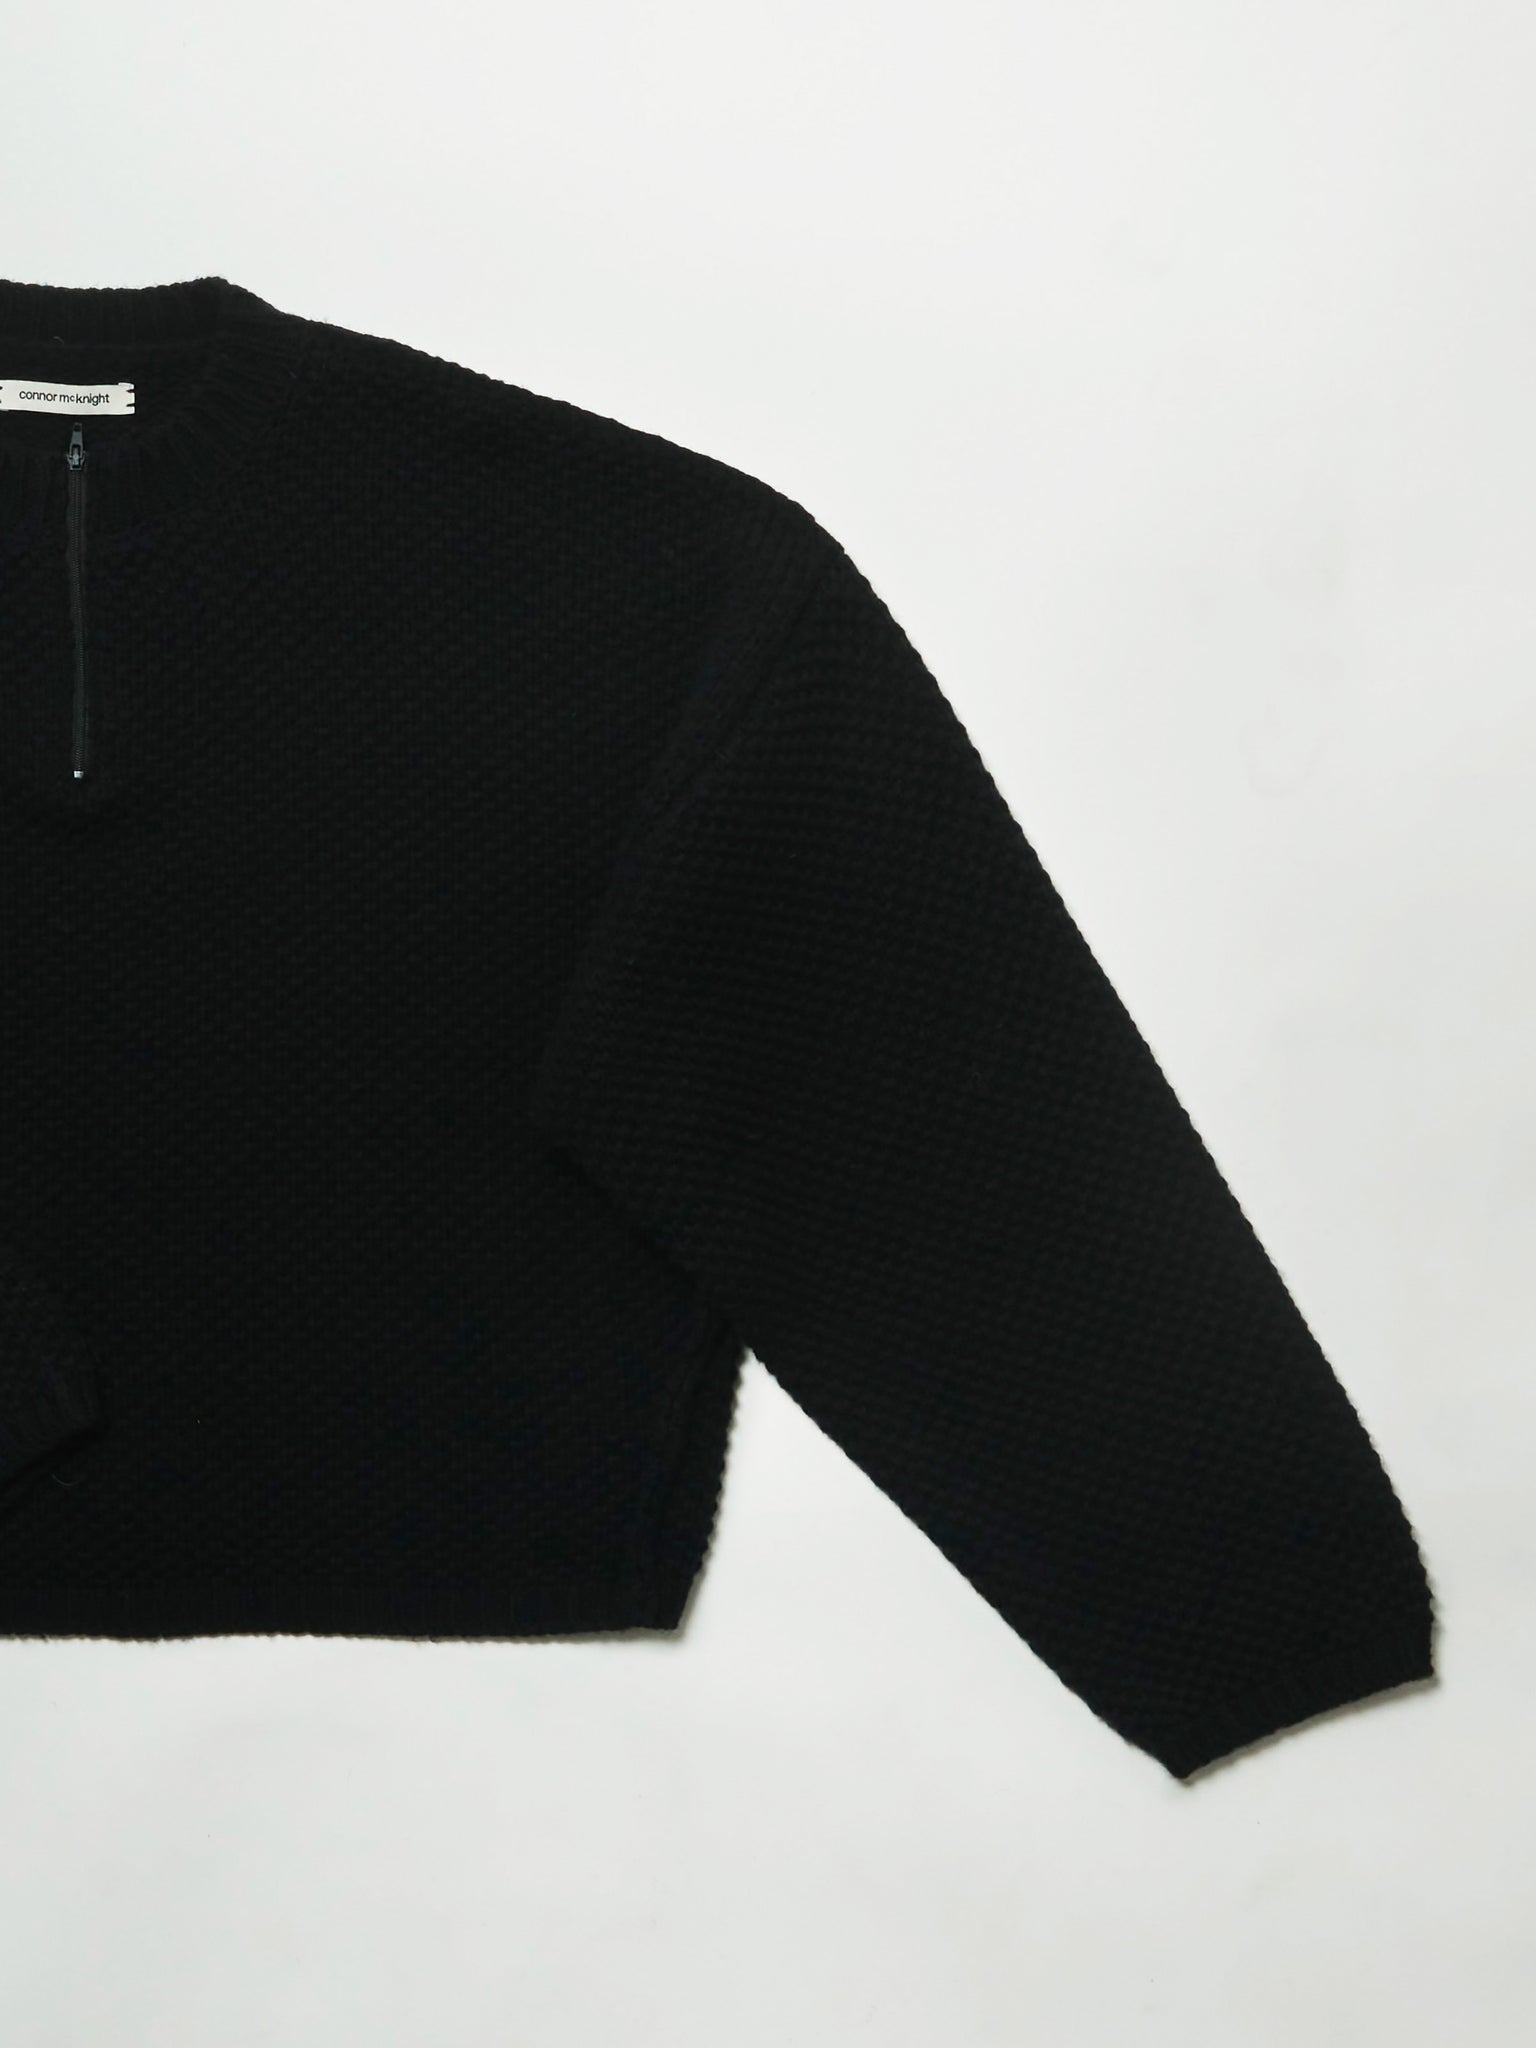 quarter zip pullover knit - black